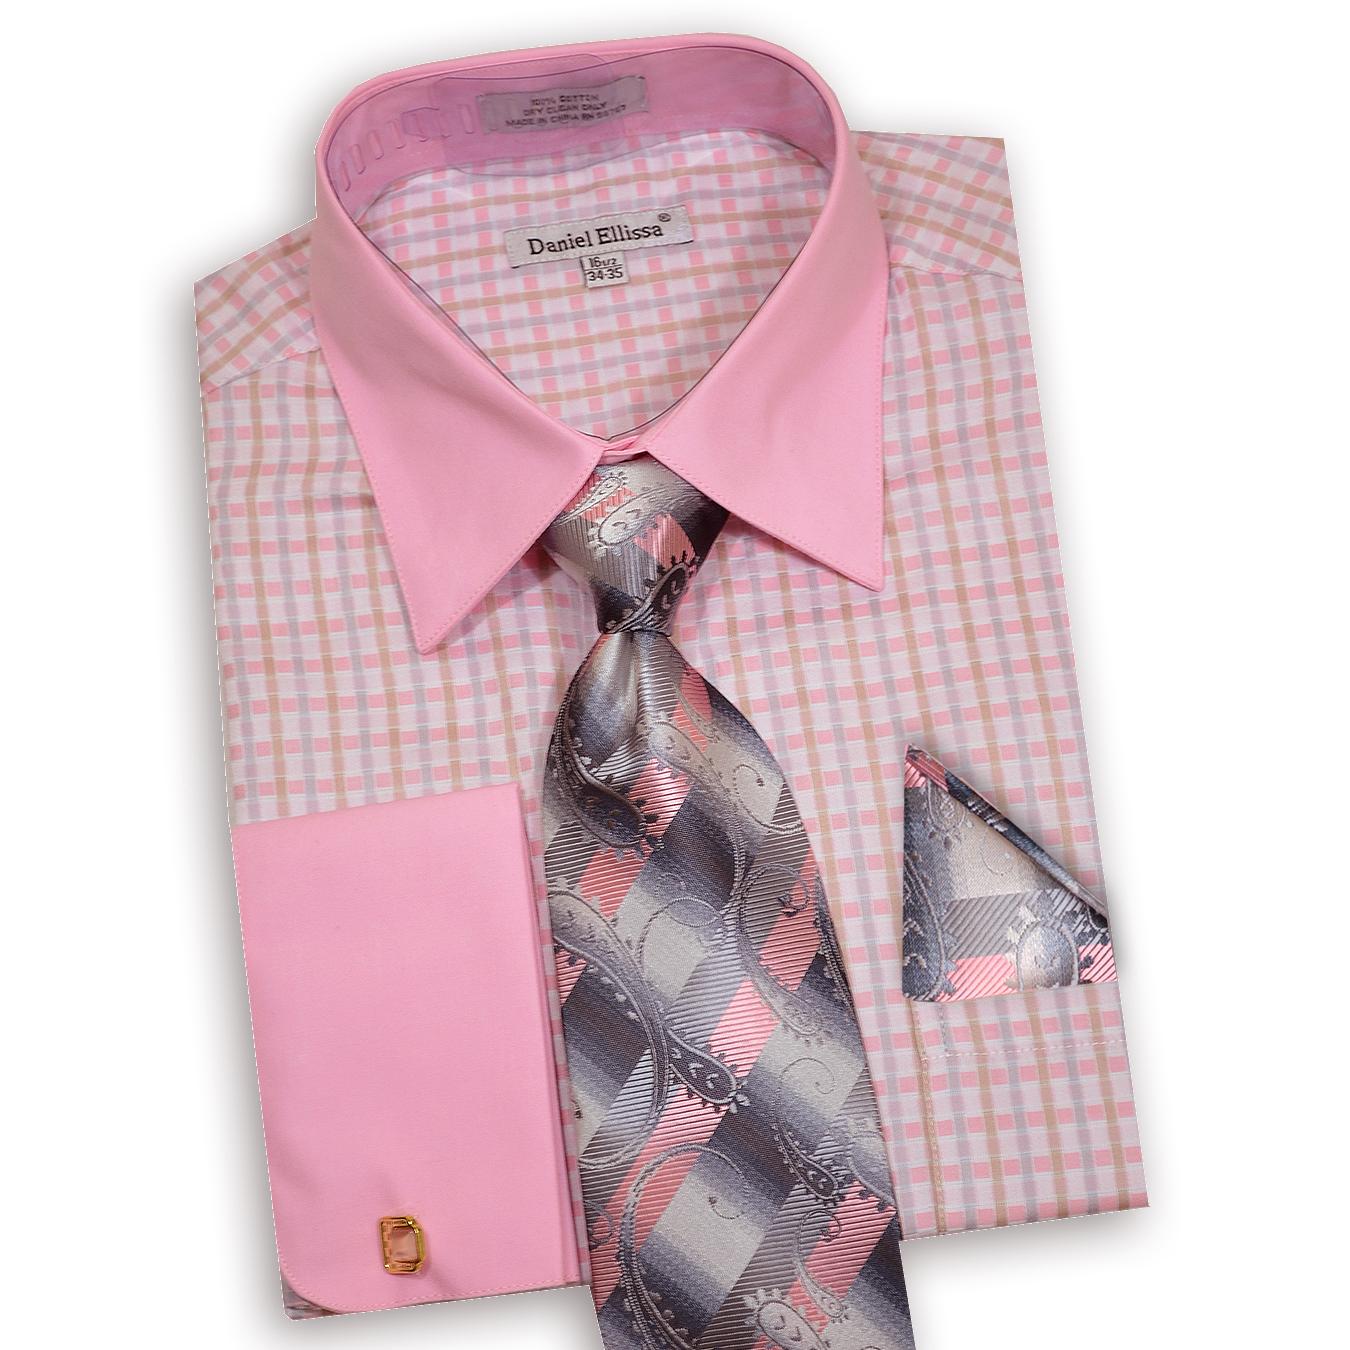 Daniel Ellissa Pink Dress Shirt, Tie, Hanky w/Cufflinks